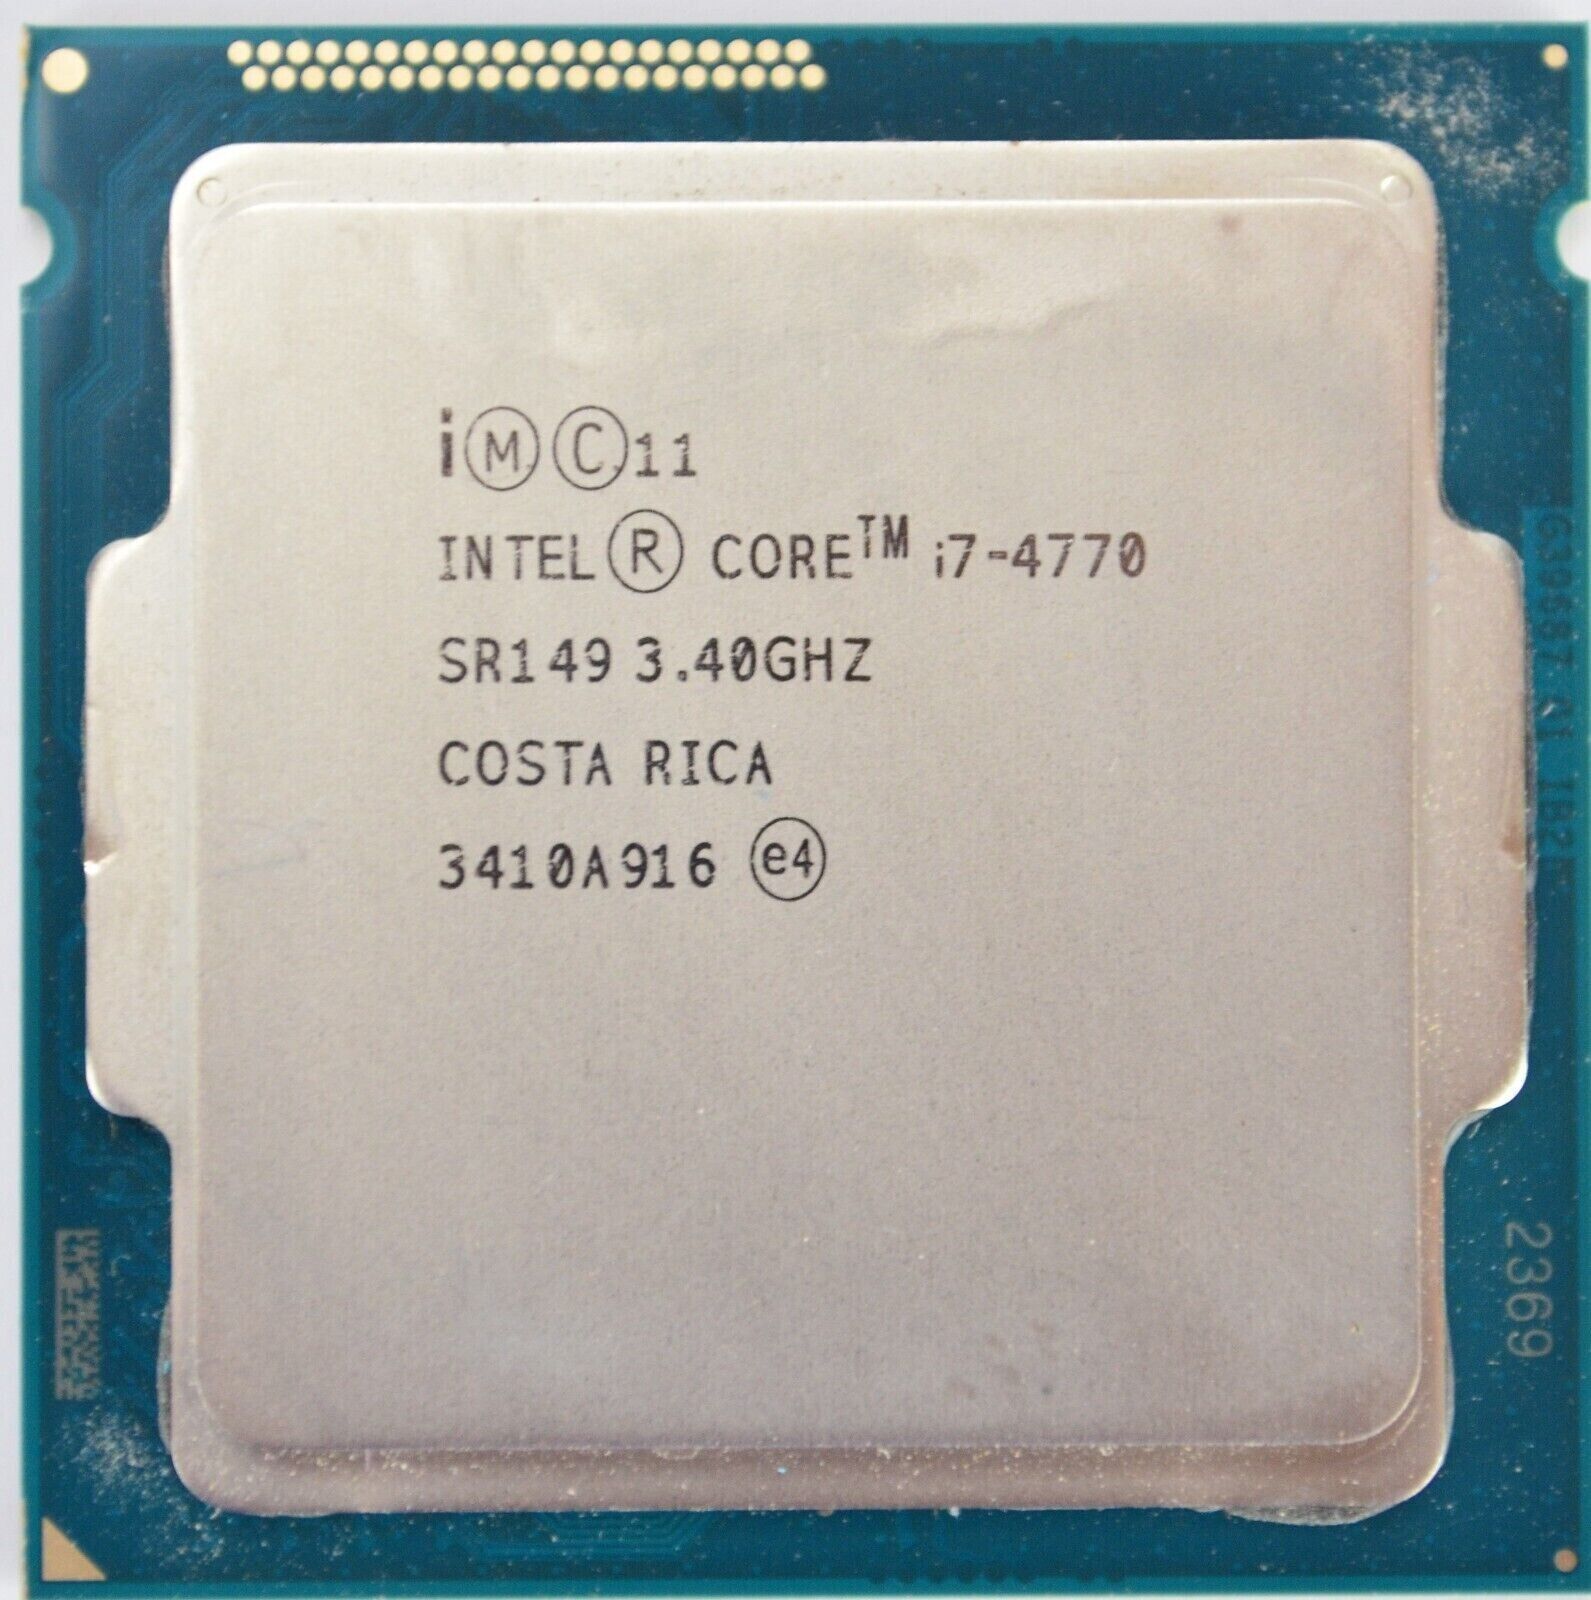 Intel Core I7-4770 3.40GHz SR149 Processor